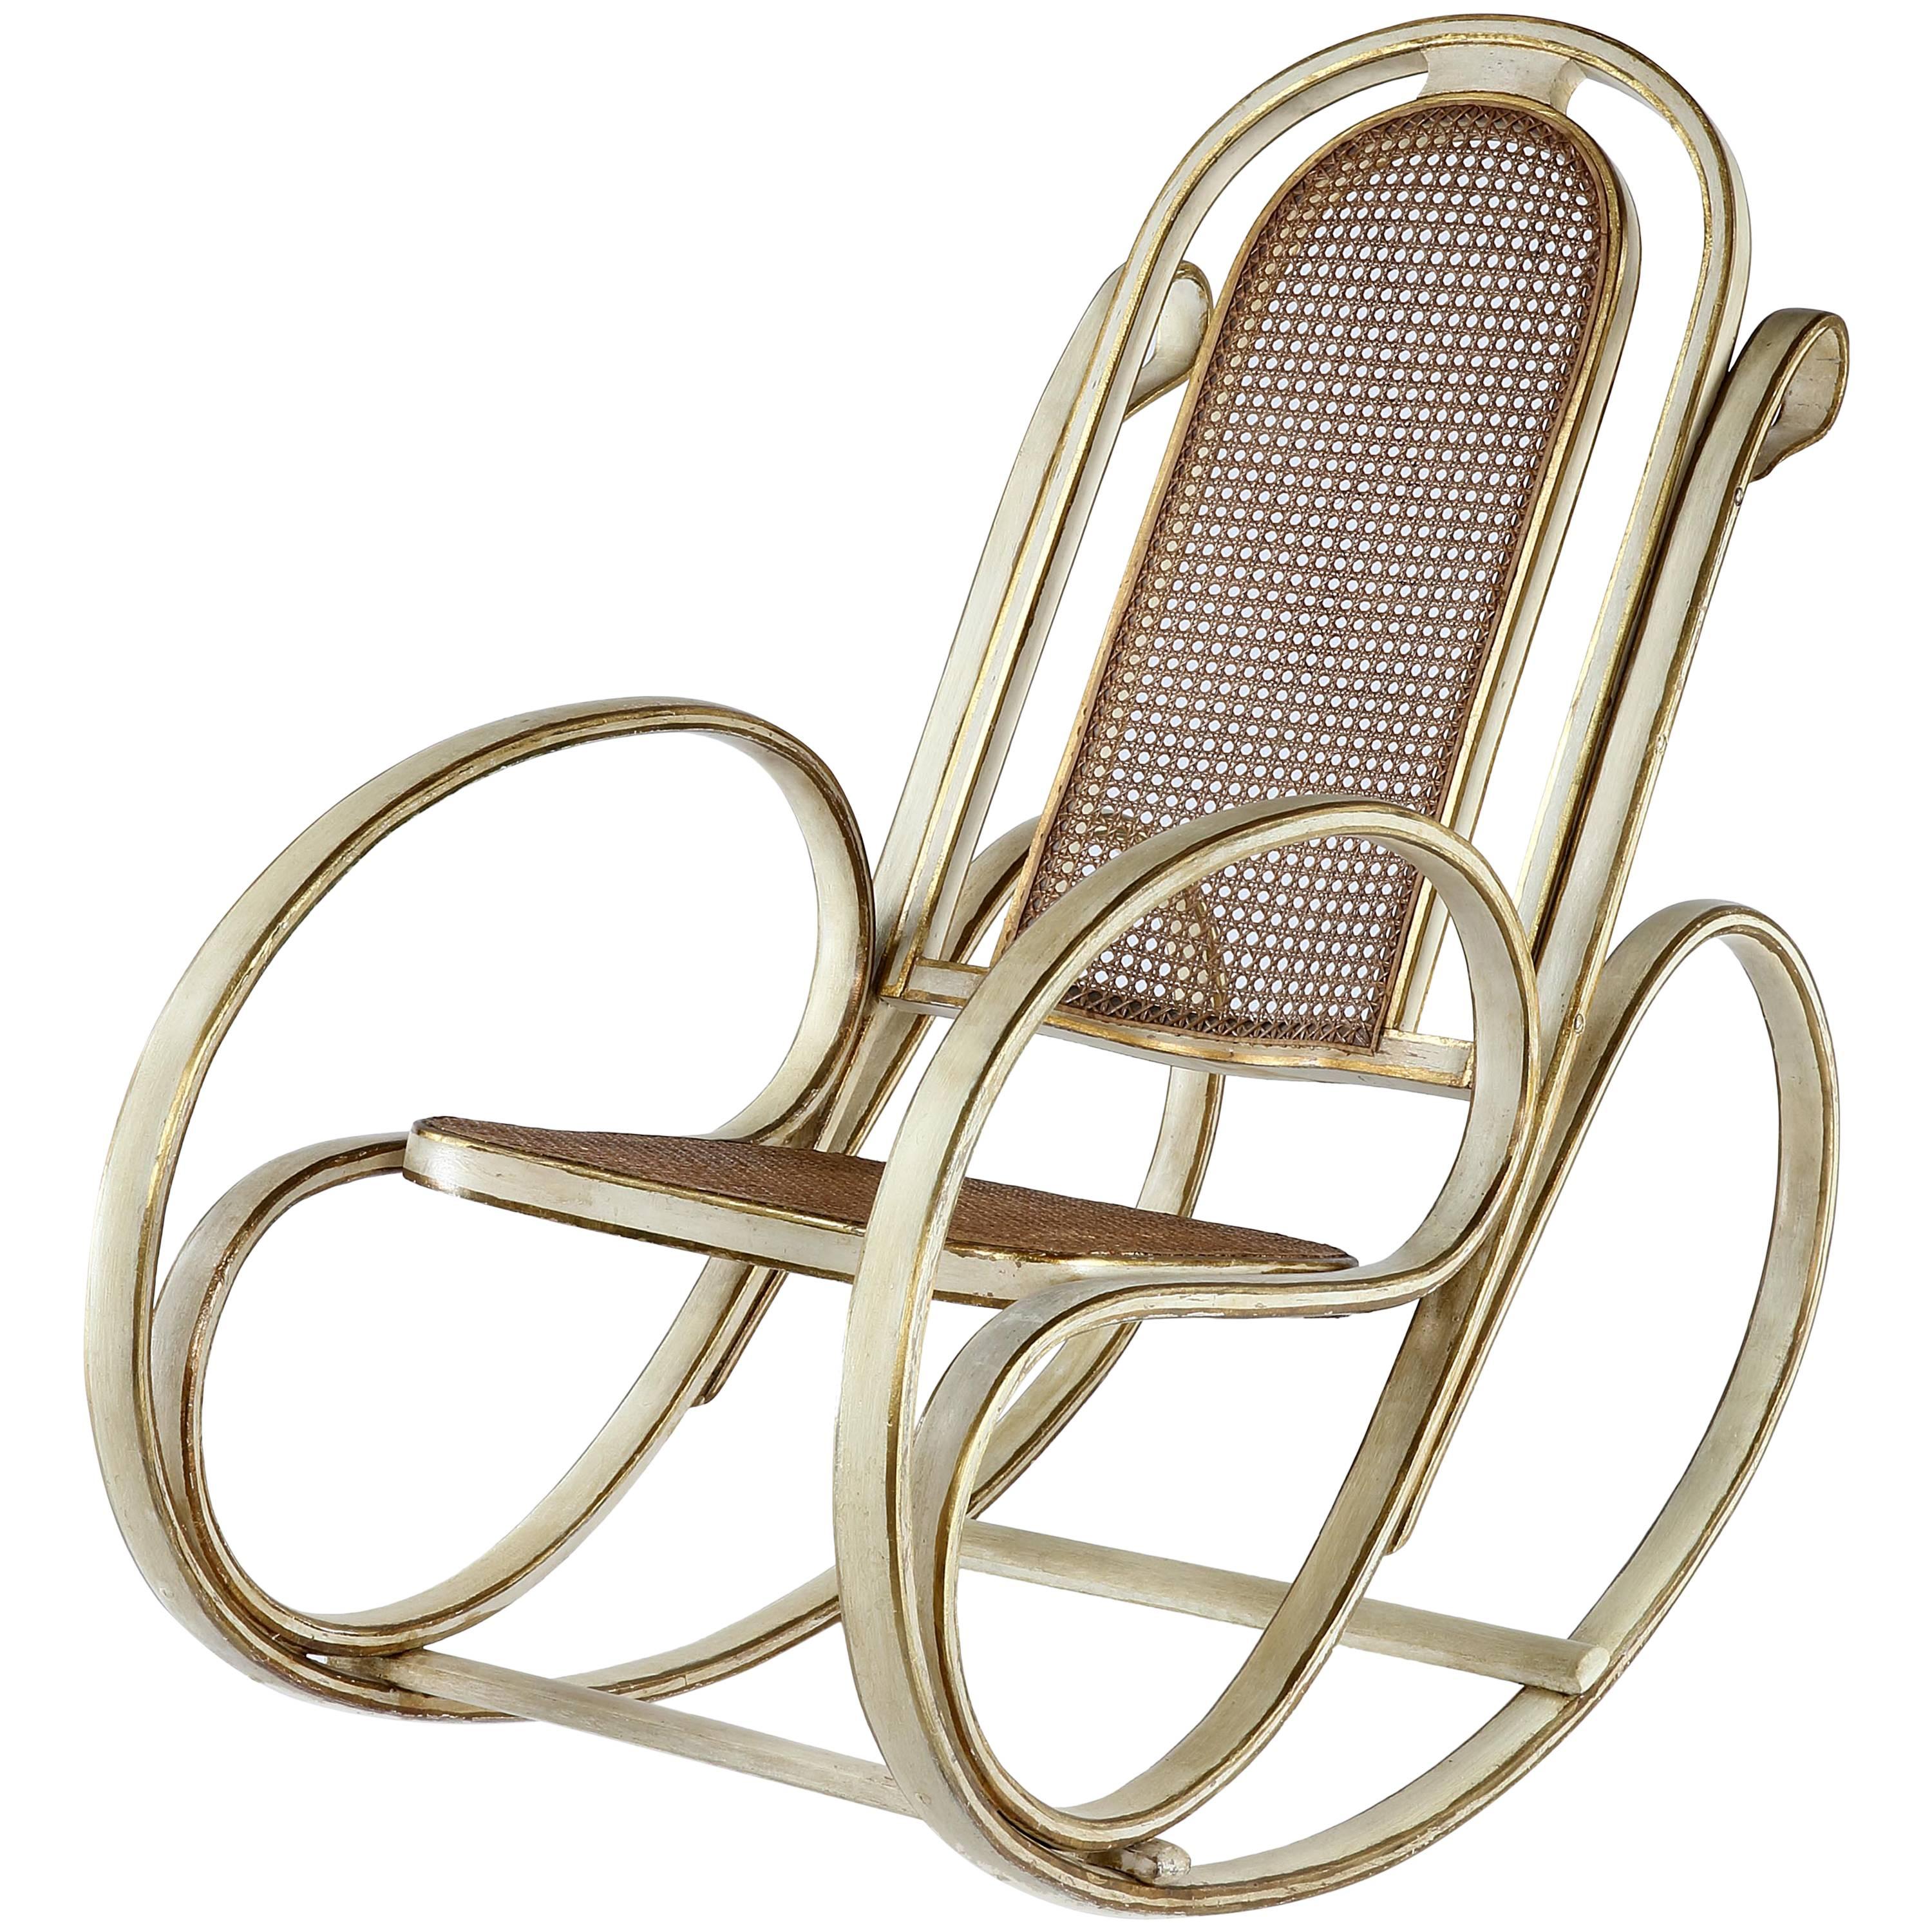 Art Nouveau Rocking Chair by Antonio Volpe